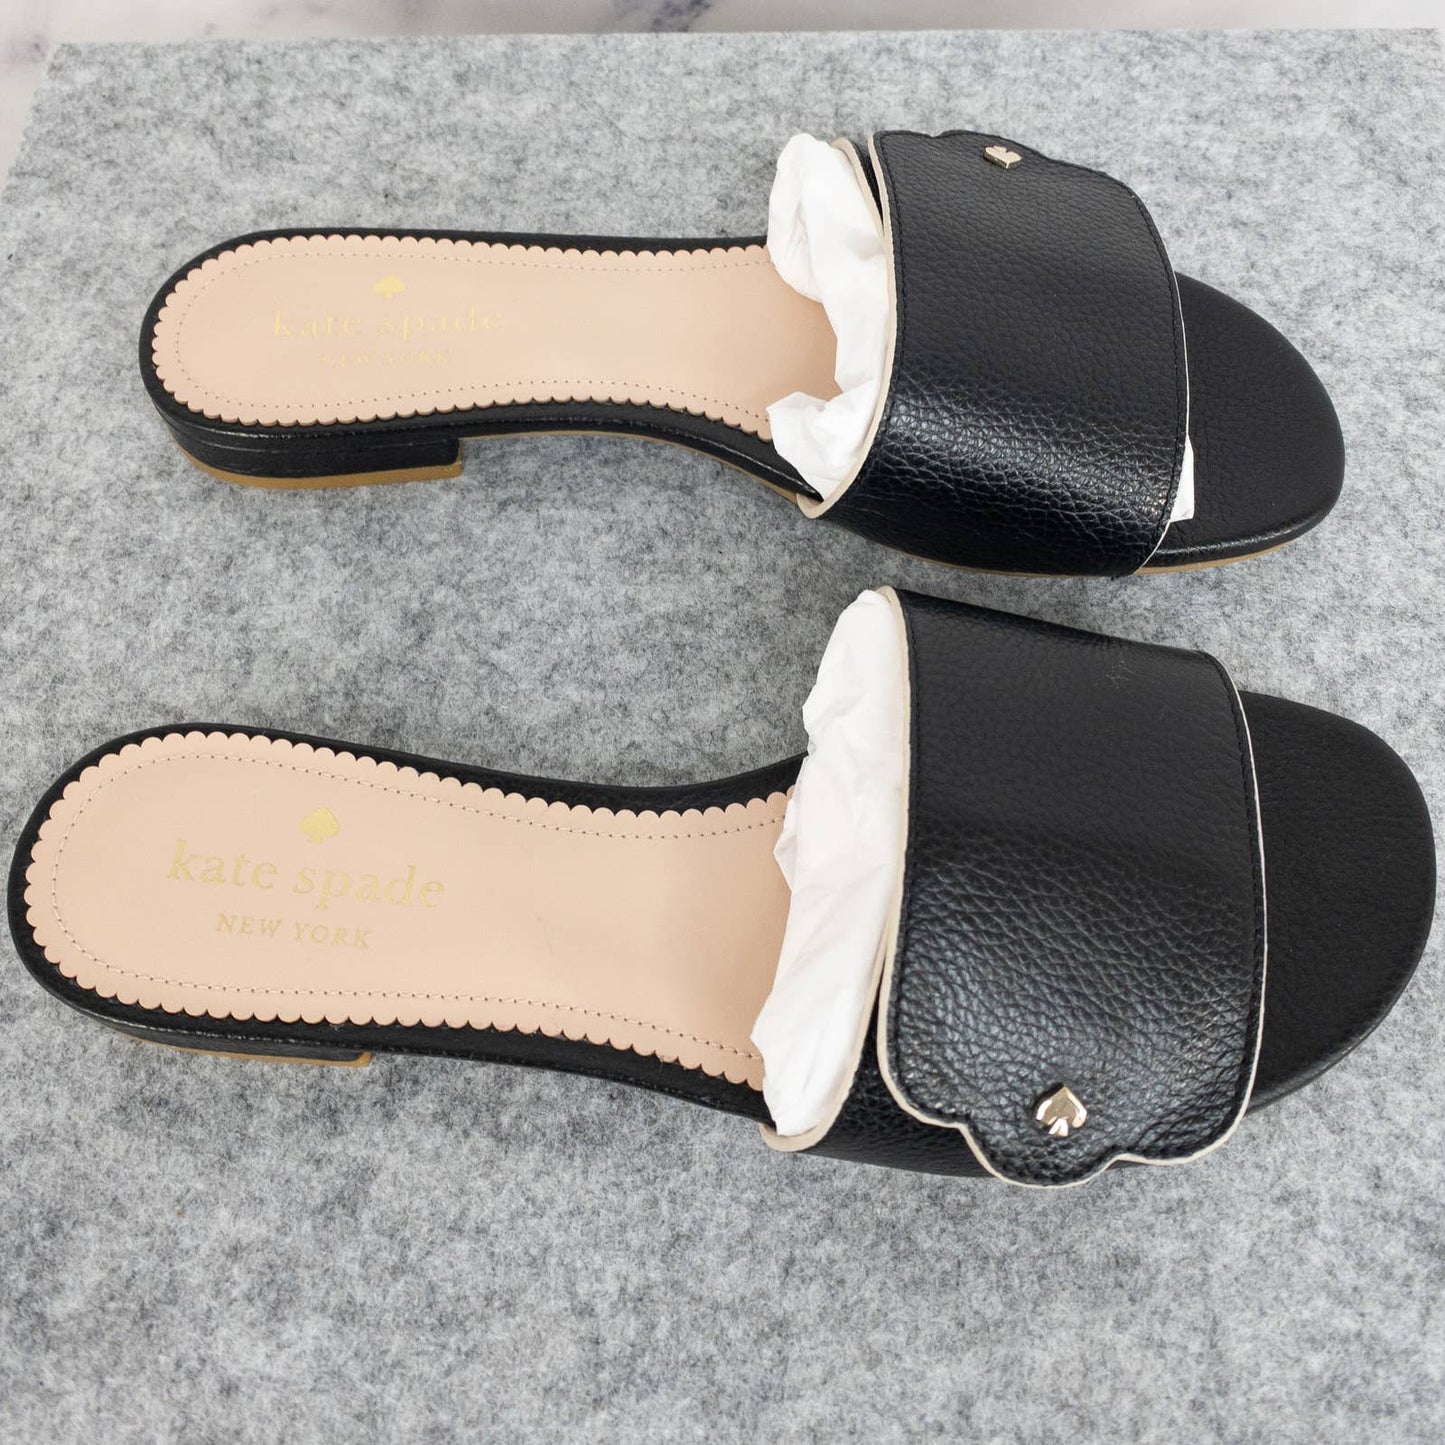 Kate Spade New York | Ginger Sandals | Size 7.5